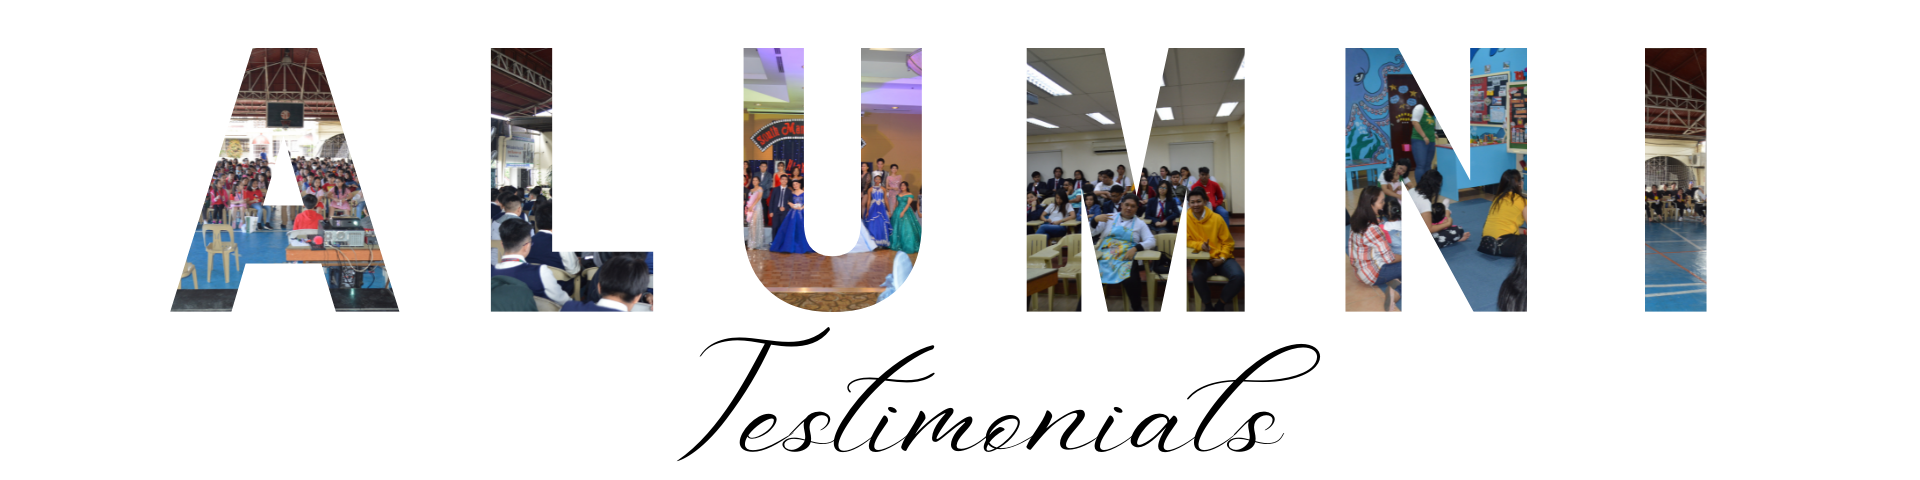 Alumni_Testimonials.png